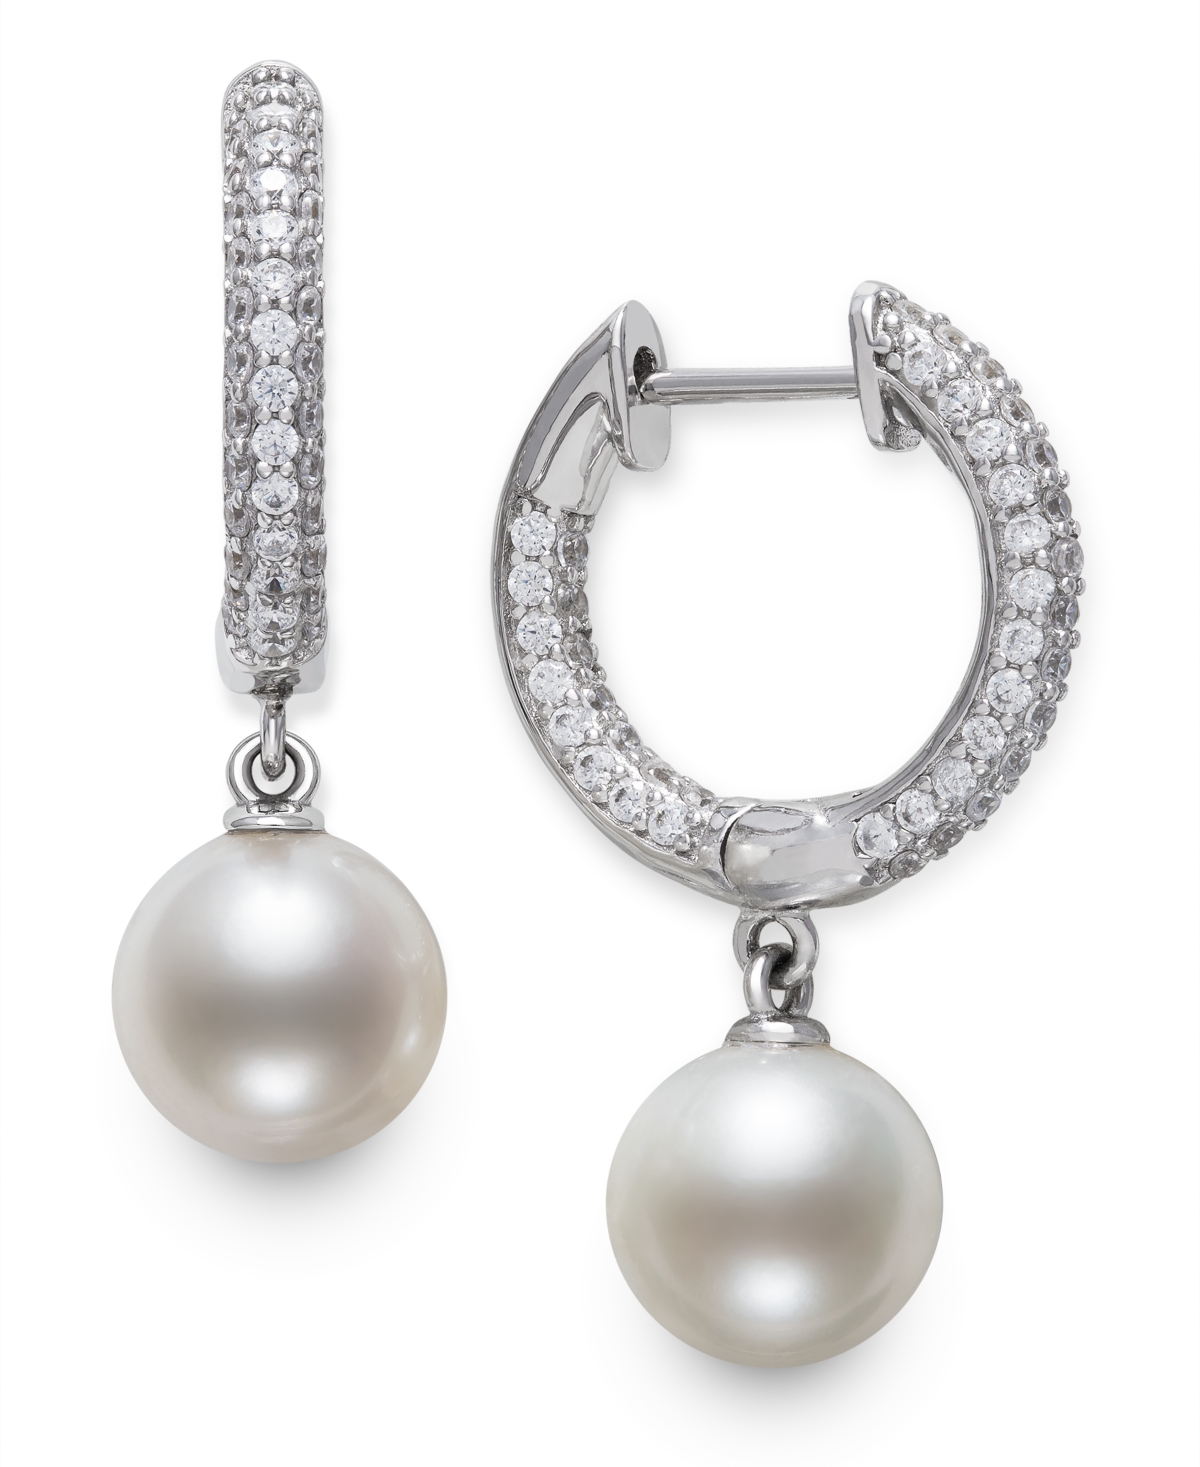 Cultured Freshwater Pearl (7mm) & Cubic Zirconia Dangle Huggie Hoop Earrings in Sterling Silver, Created for Macy's - Sterling Silver